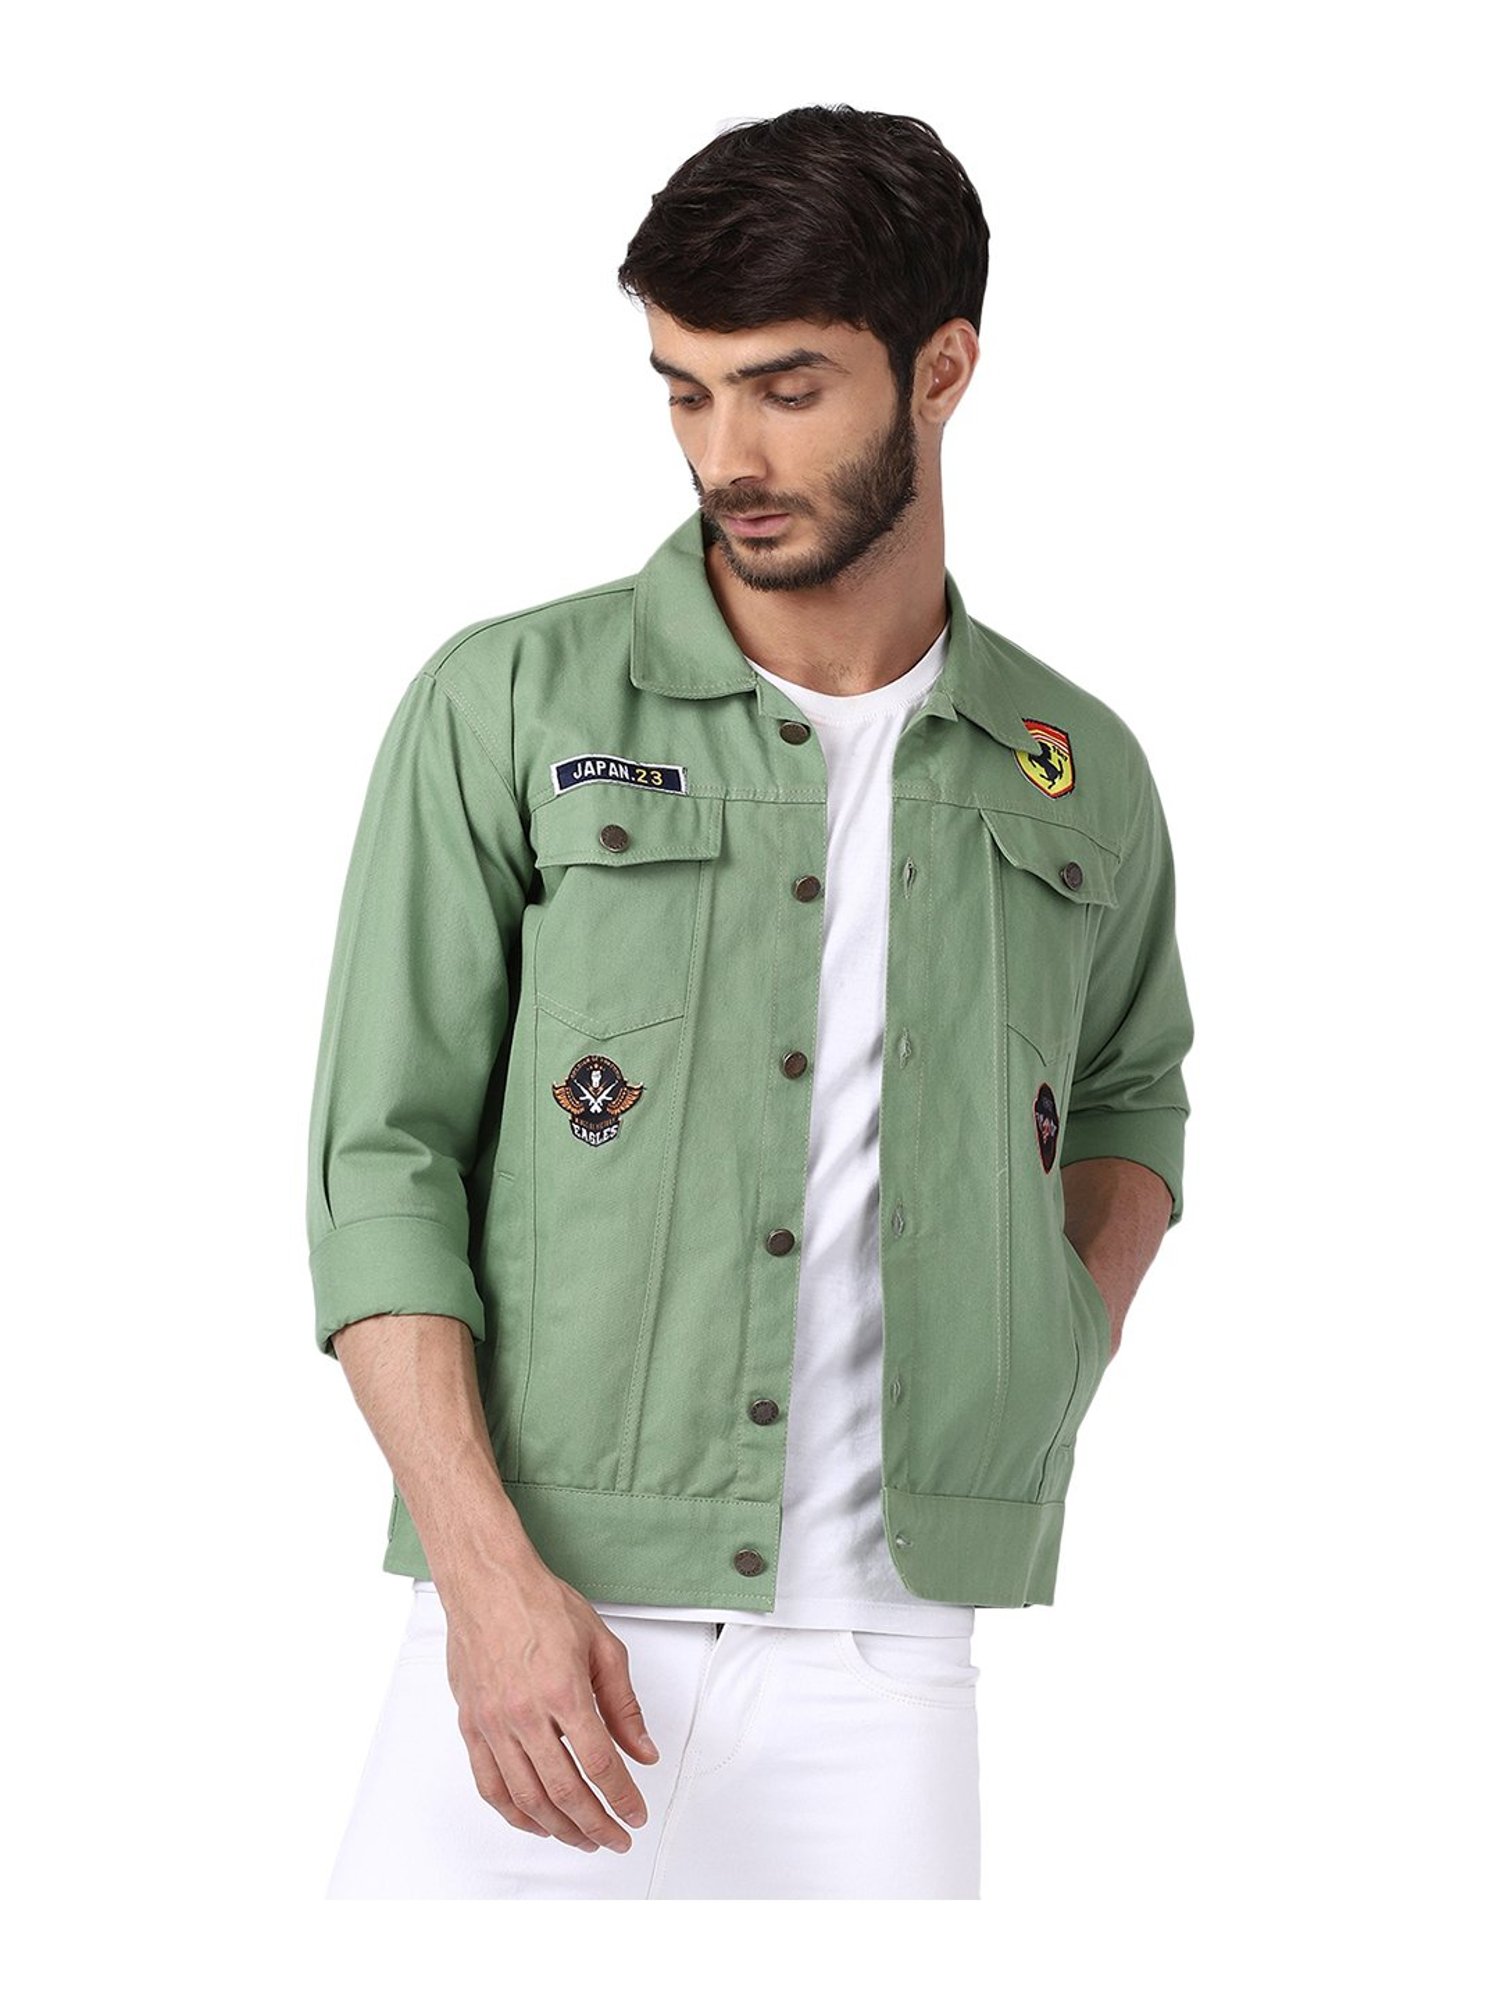 Jackets Men Army Green Denim Jacket Military Windbreaker Solid Coat Clothes  | eBay